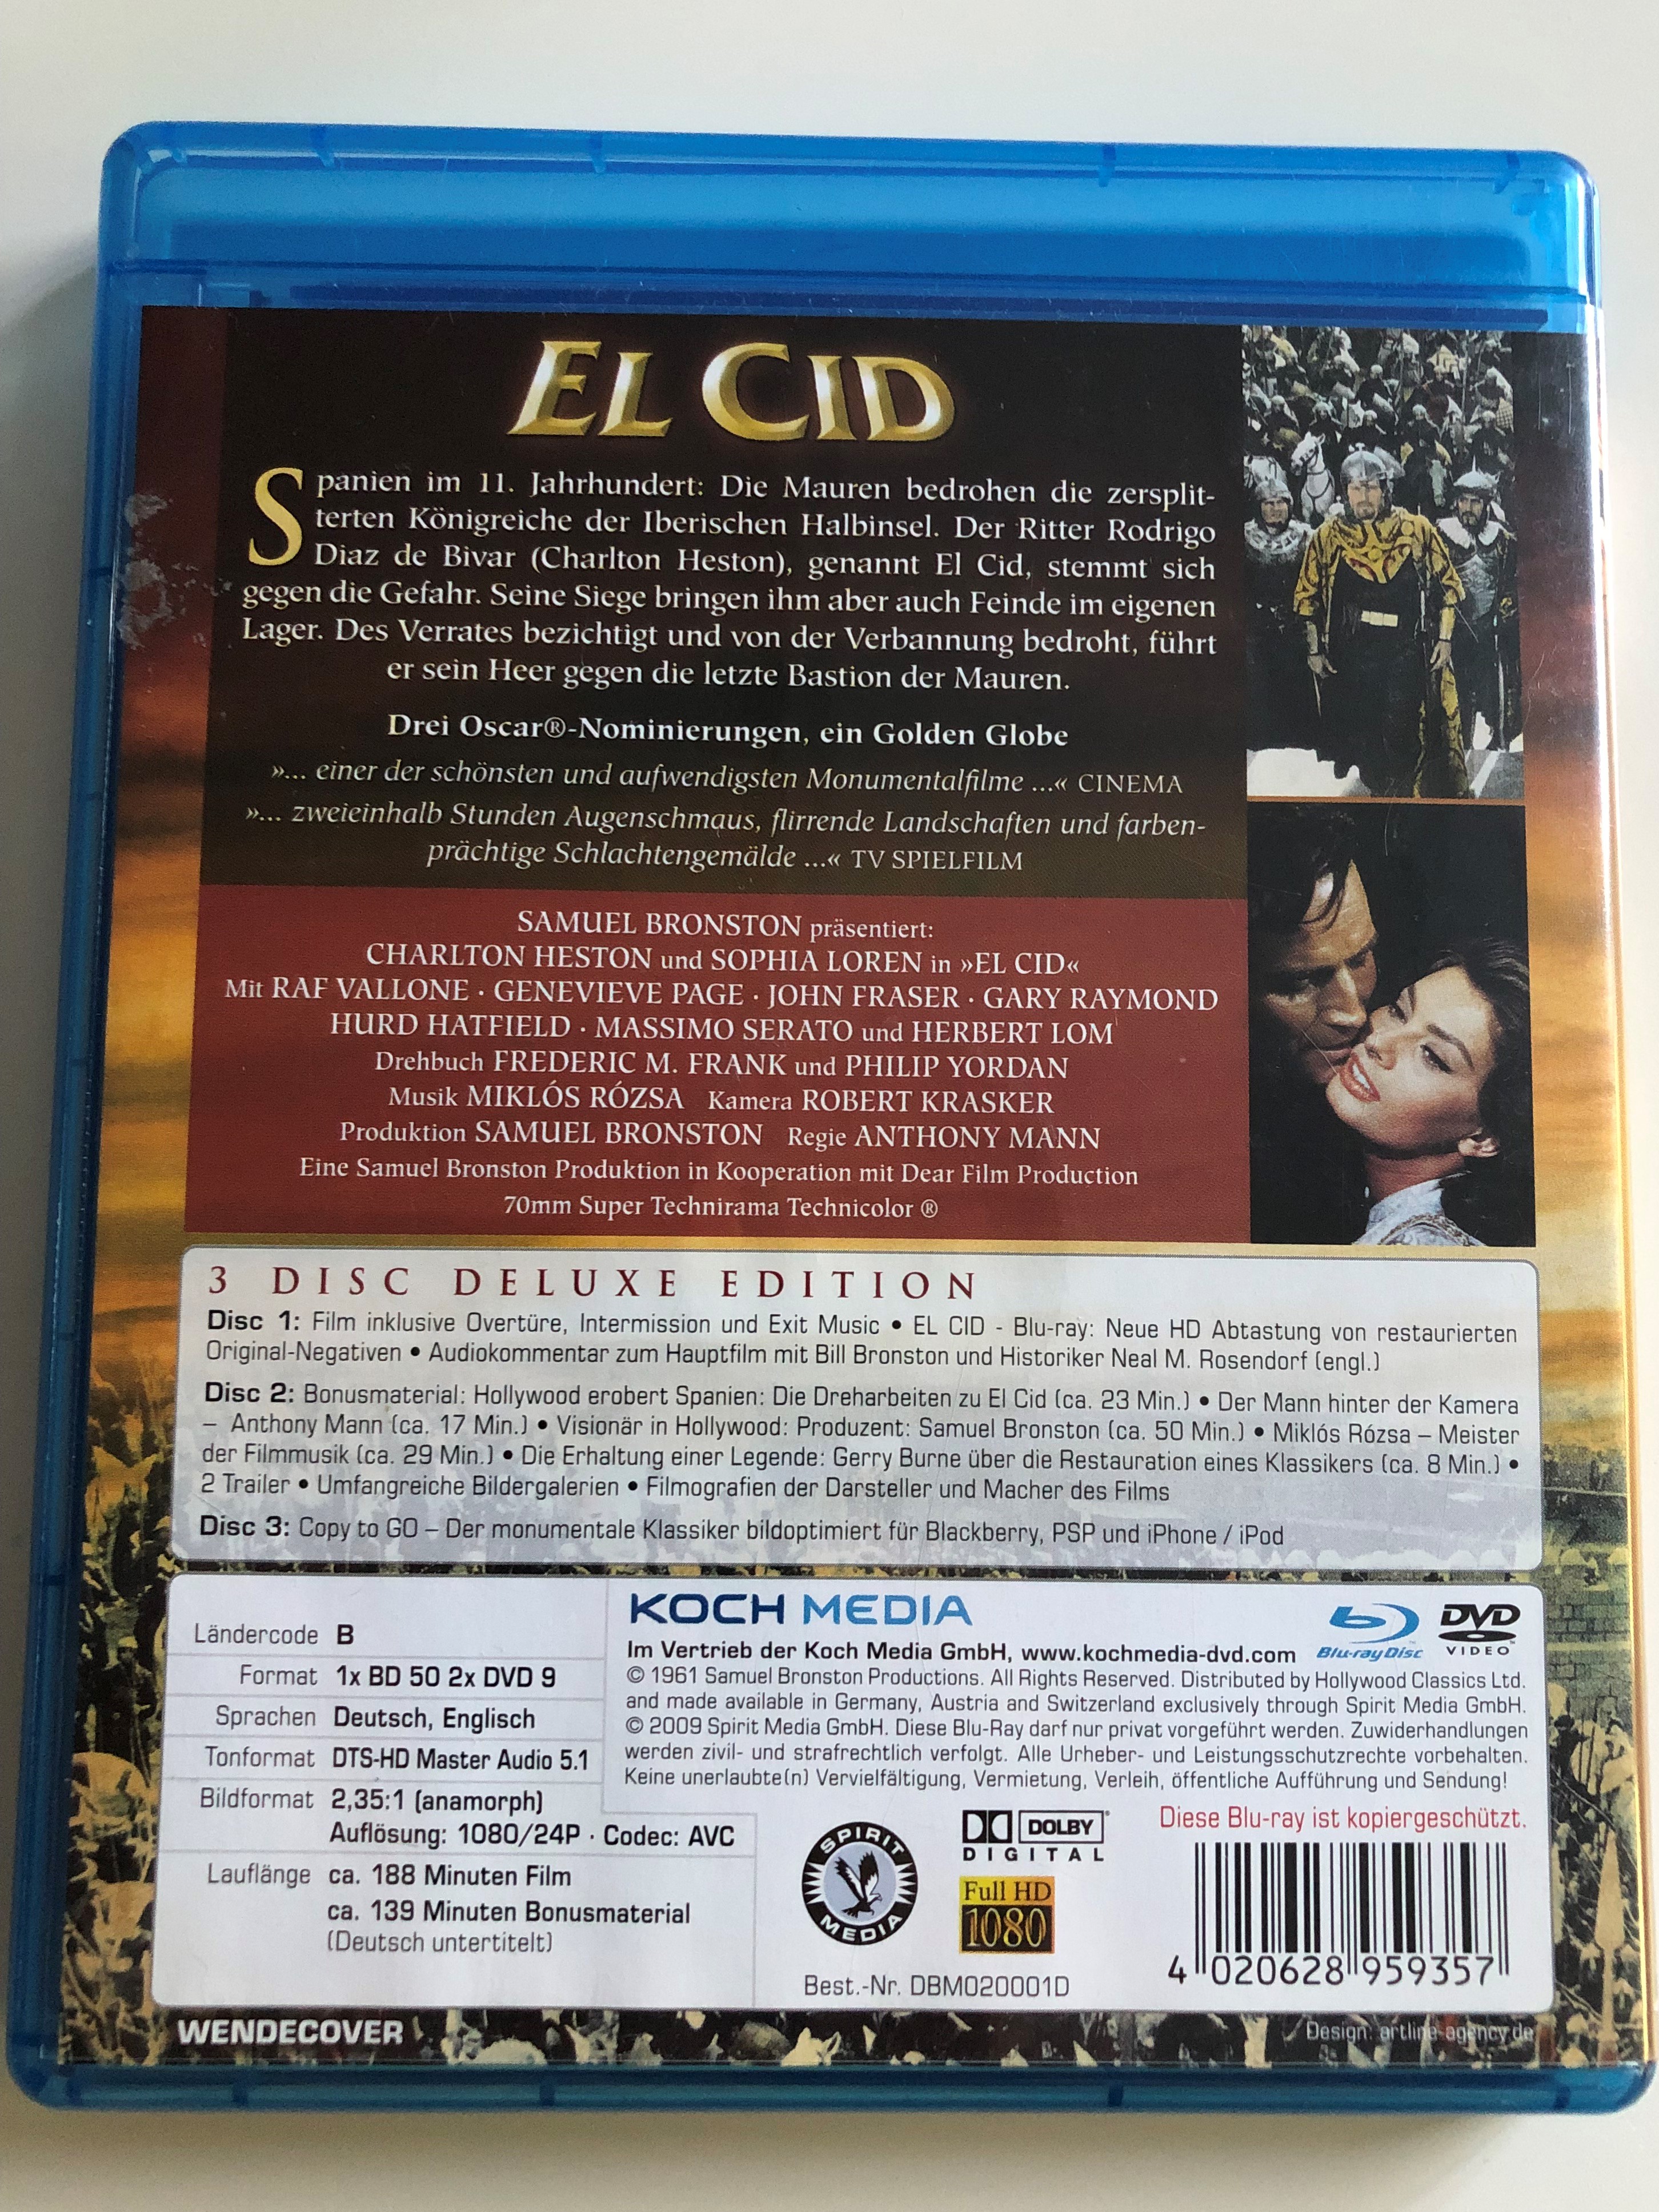 El Cid DVD 1961 - 3 disc DELUXE edition / Directed by Anthony Mann /  Starring: Charlton Heston, Sophia Loren, Raf Vallone, Geneviève Page, John  Fraser, Gary Raymond, Herbert Lom, Douglas Wilmer - bibleinmylanguage